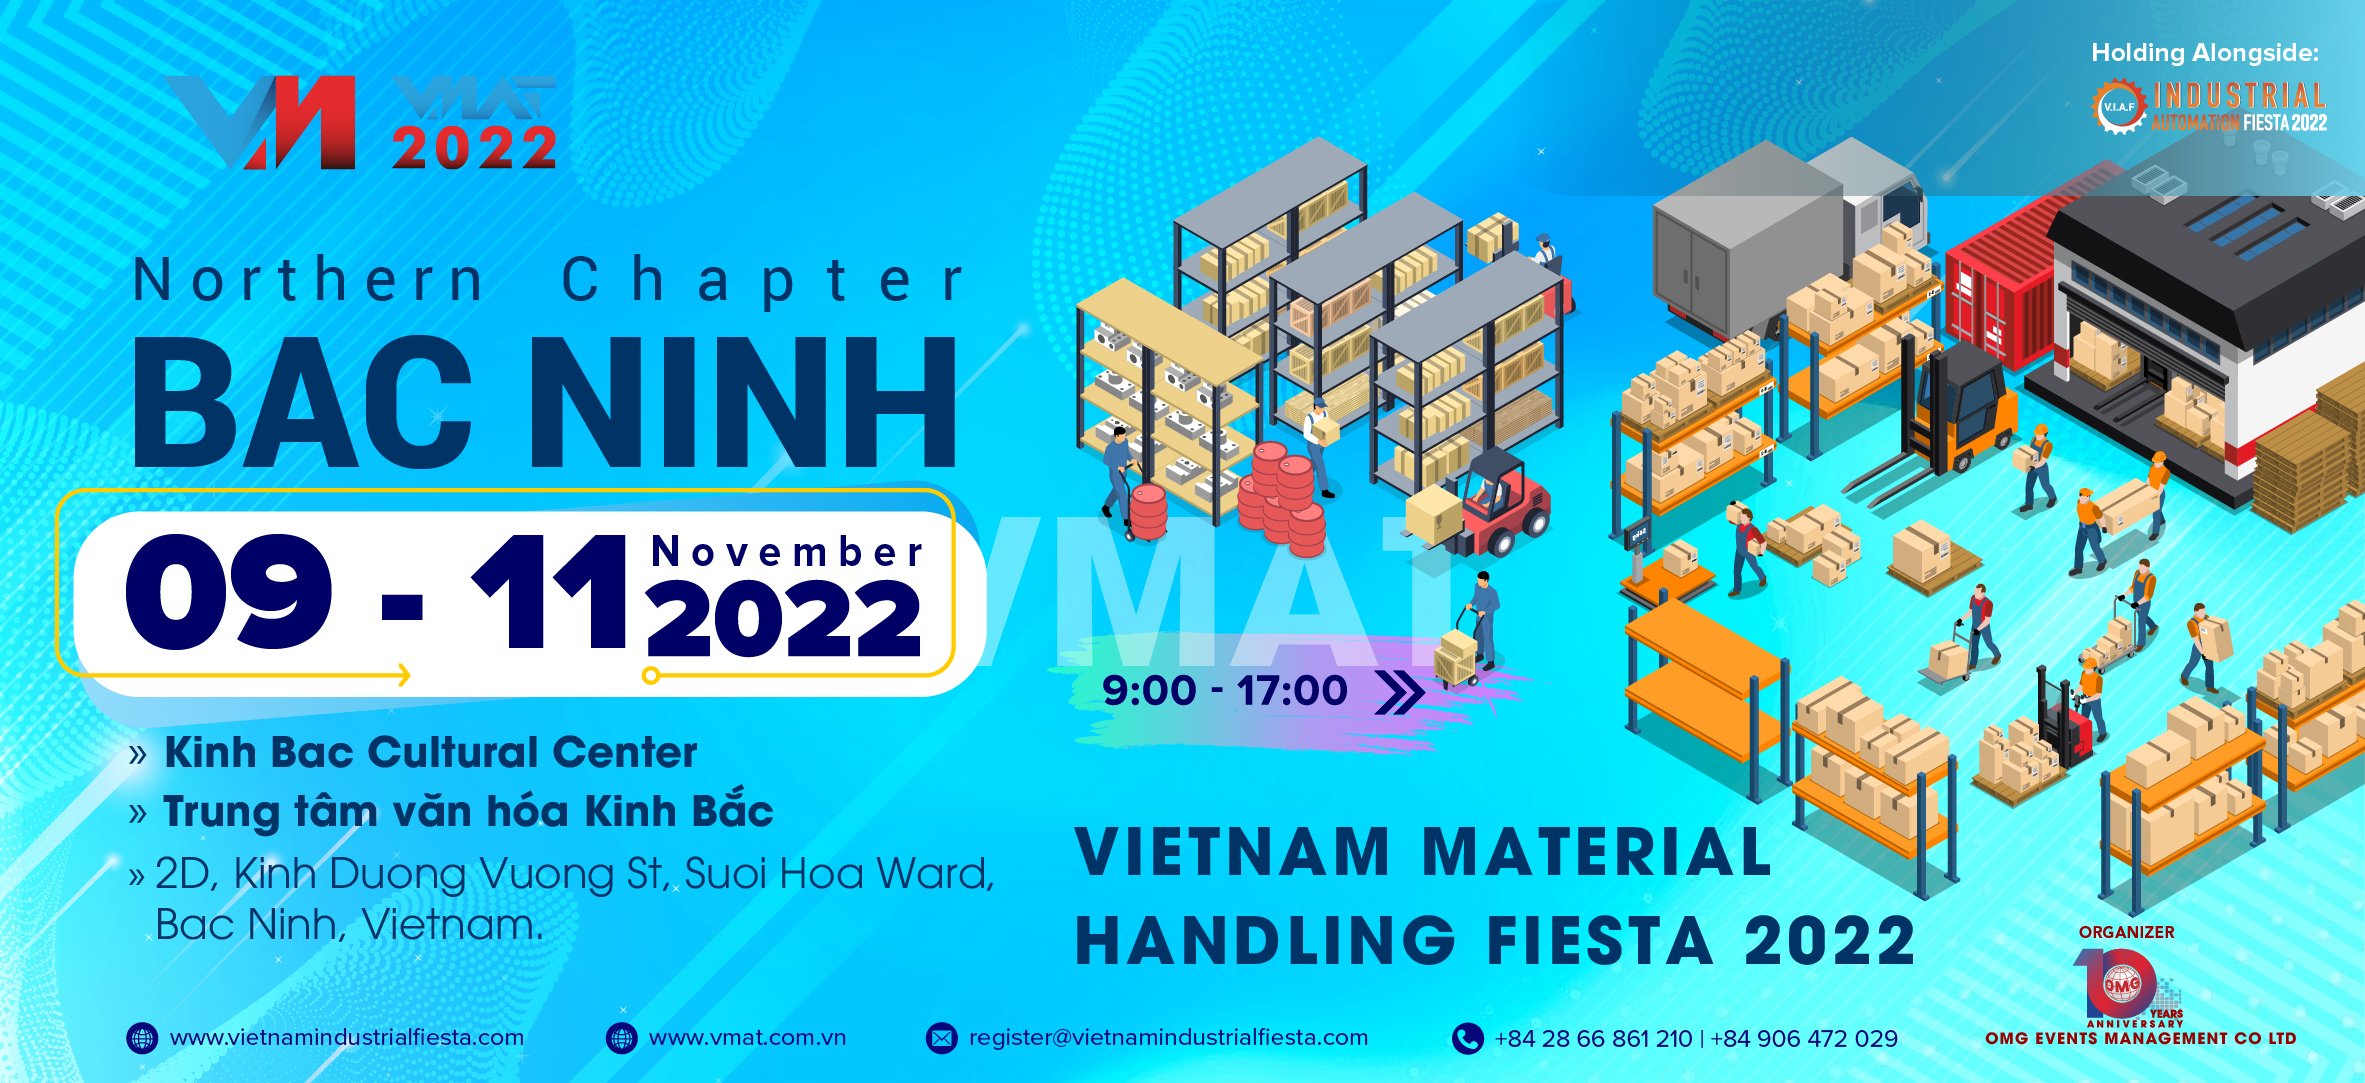 VMAT - VIETNAM MATERIAL HANDLING FIESTA 2022